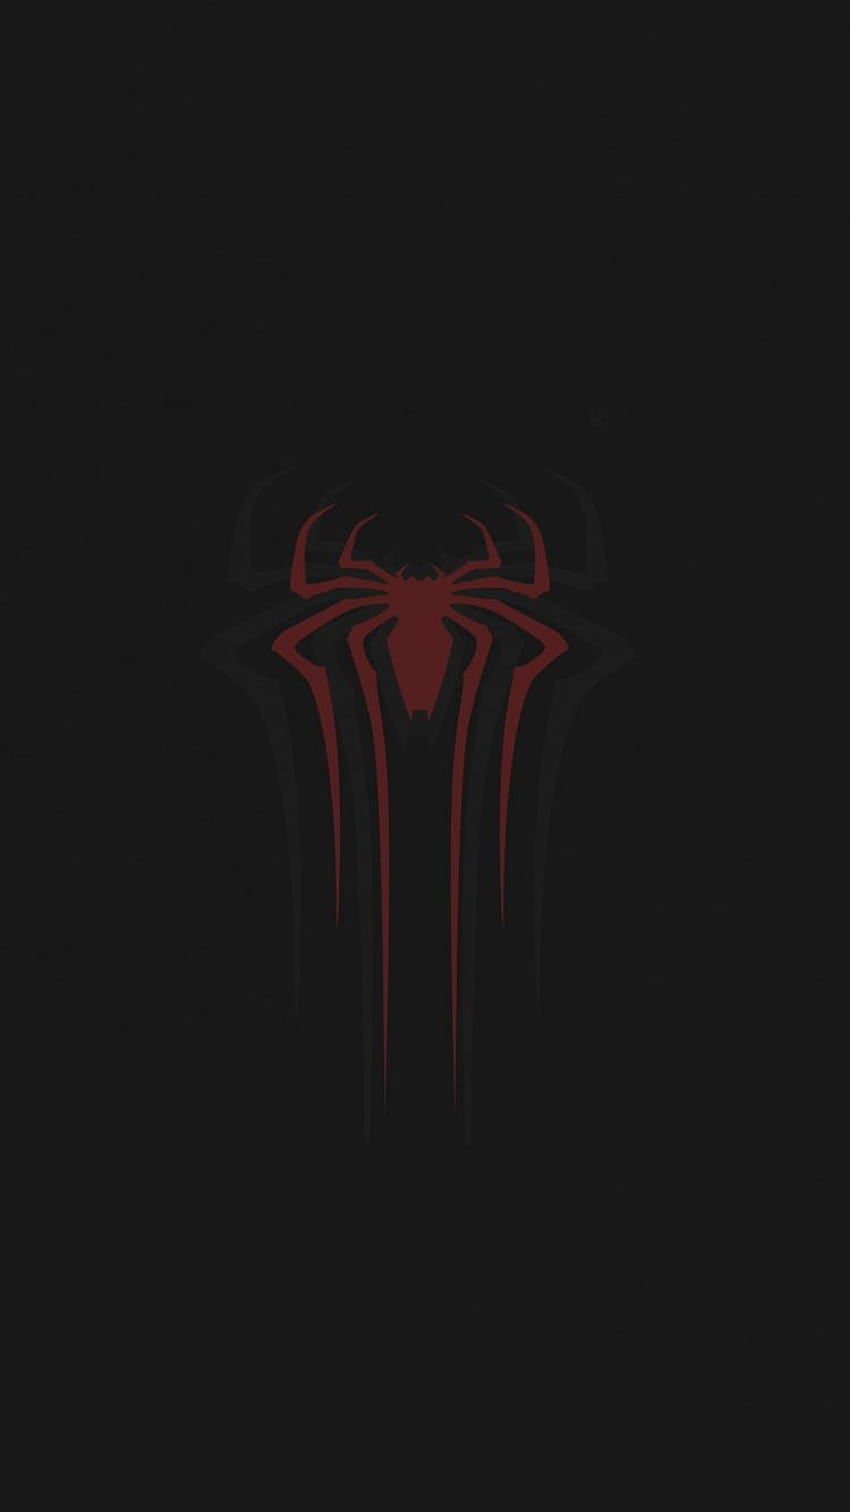 Spiderman Logo Wallpaper 67 images